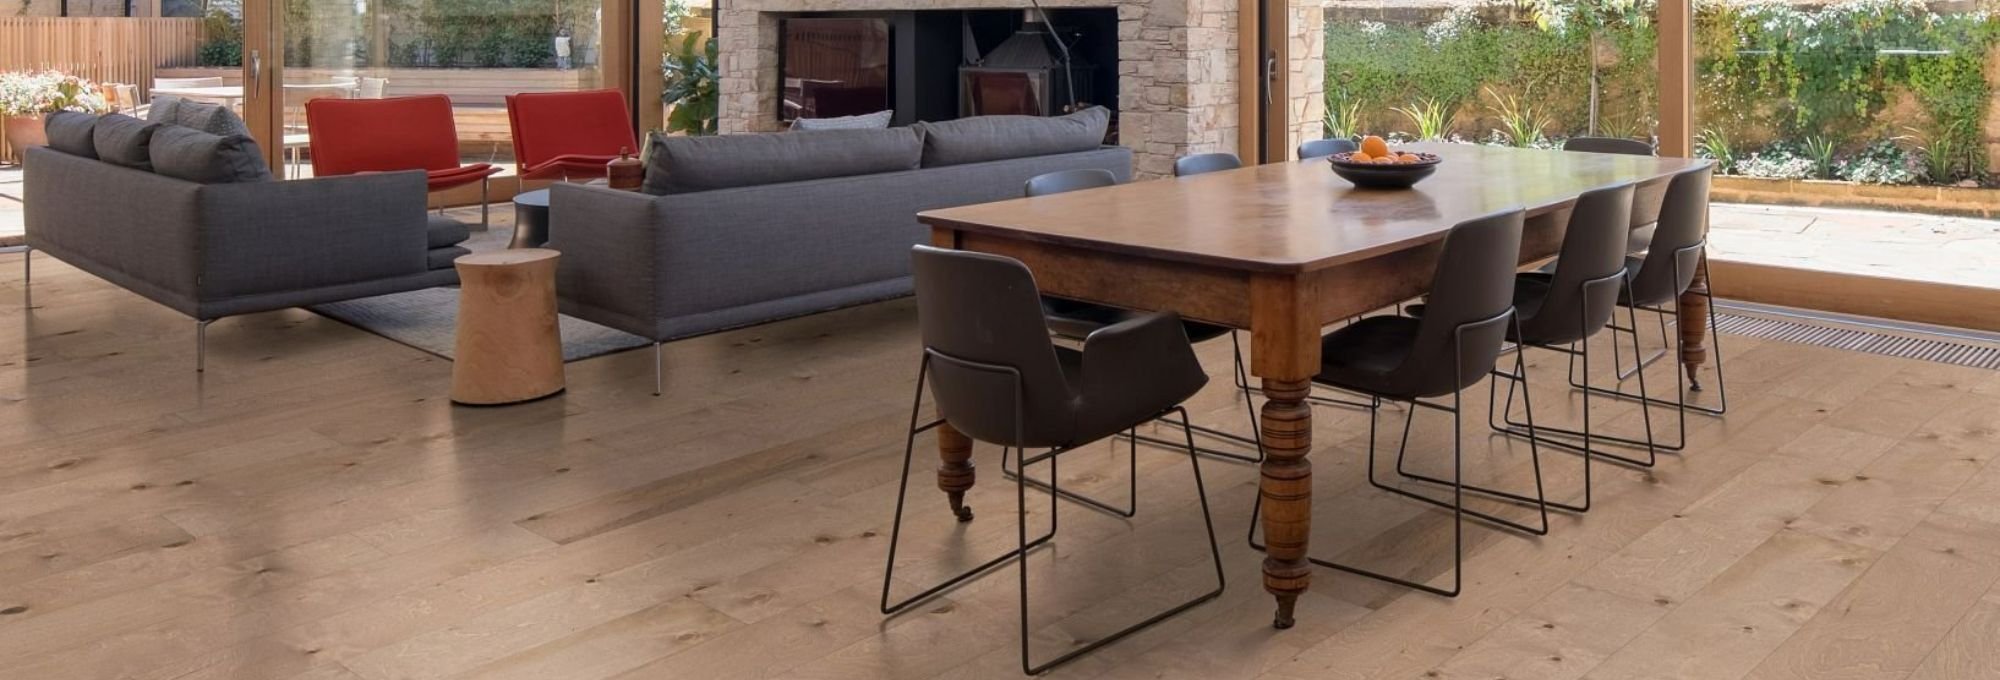 brown hardwood flooring for living room on Dallas Dr, Denton, Texas area